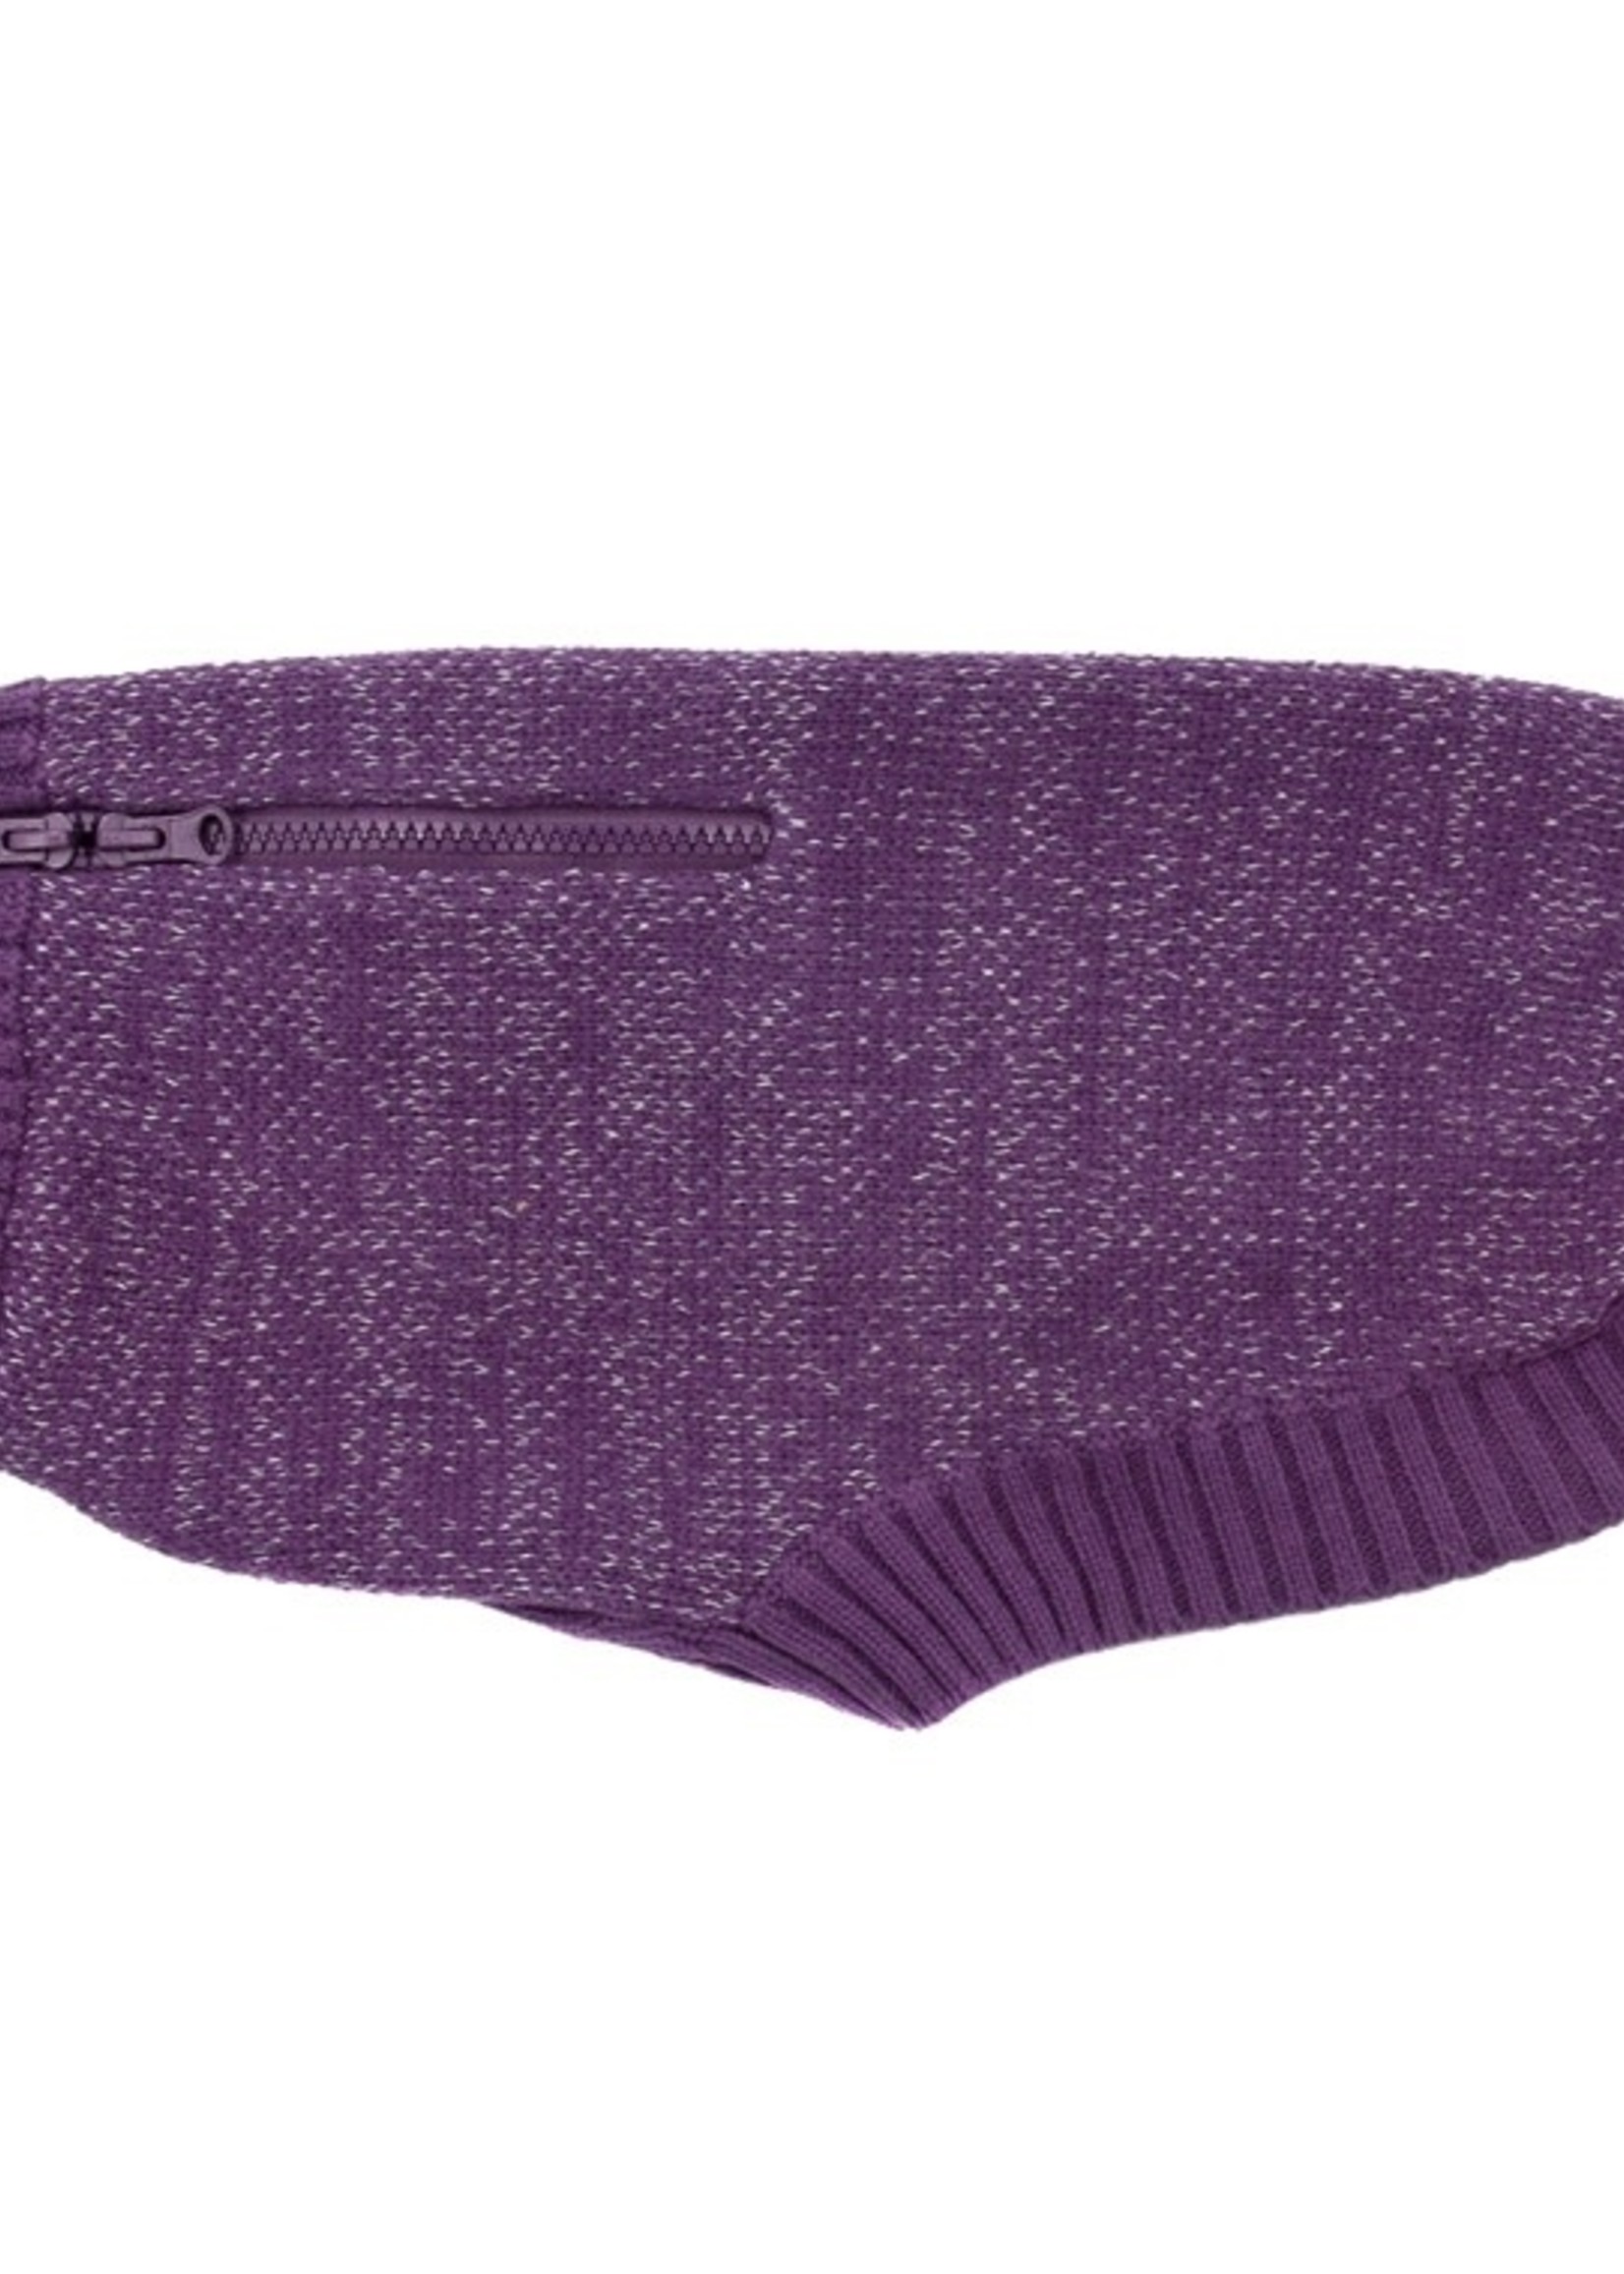 RC Pets Polaris Sweater L Plum Purple